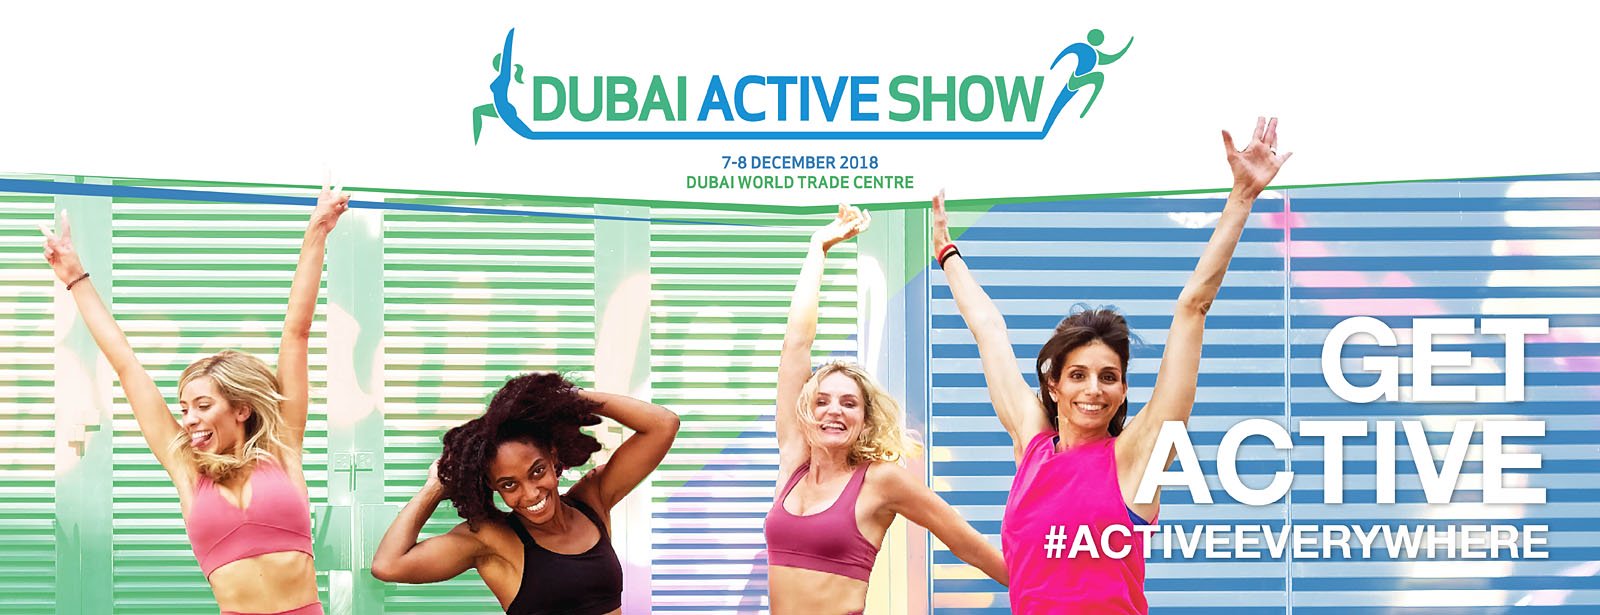 Dubai Active Show 2018 - Coming Soon in UAE